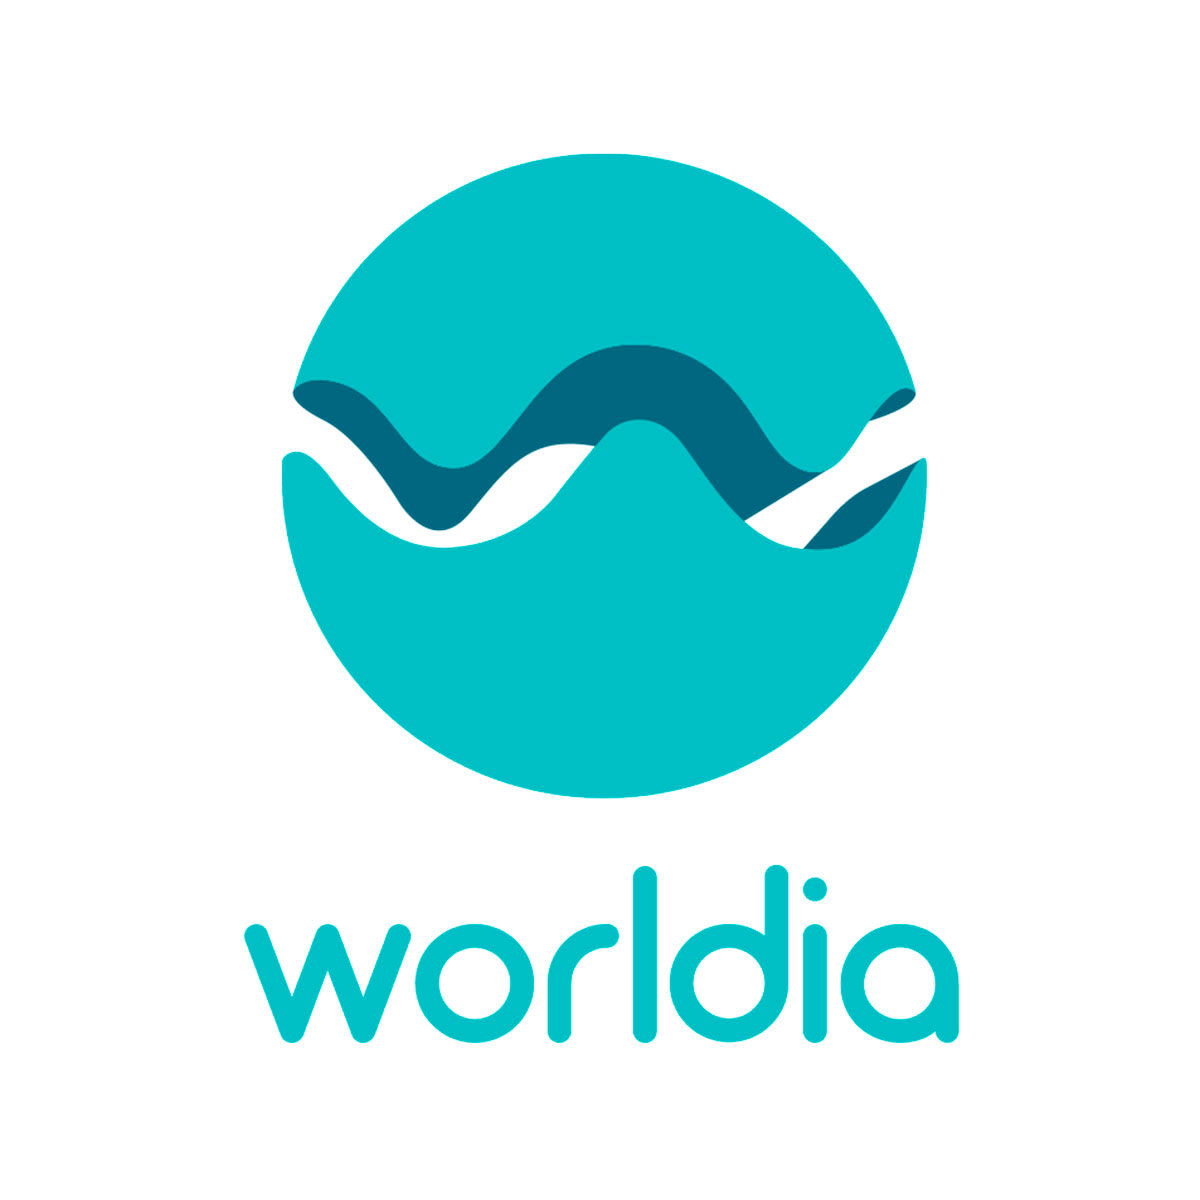 Worldia - yneo design